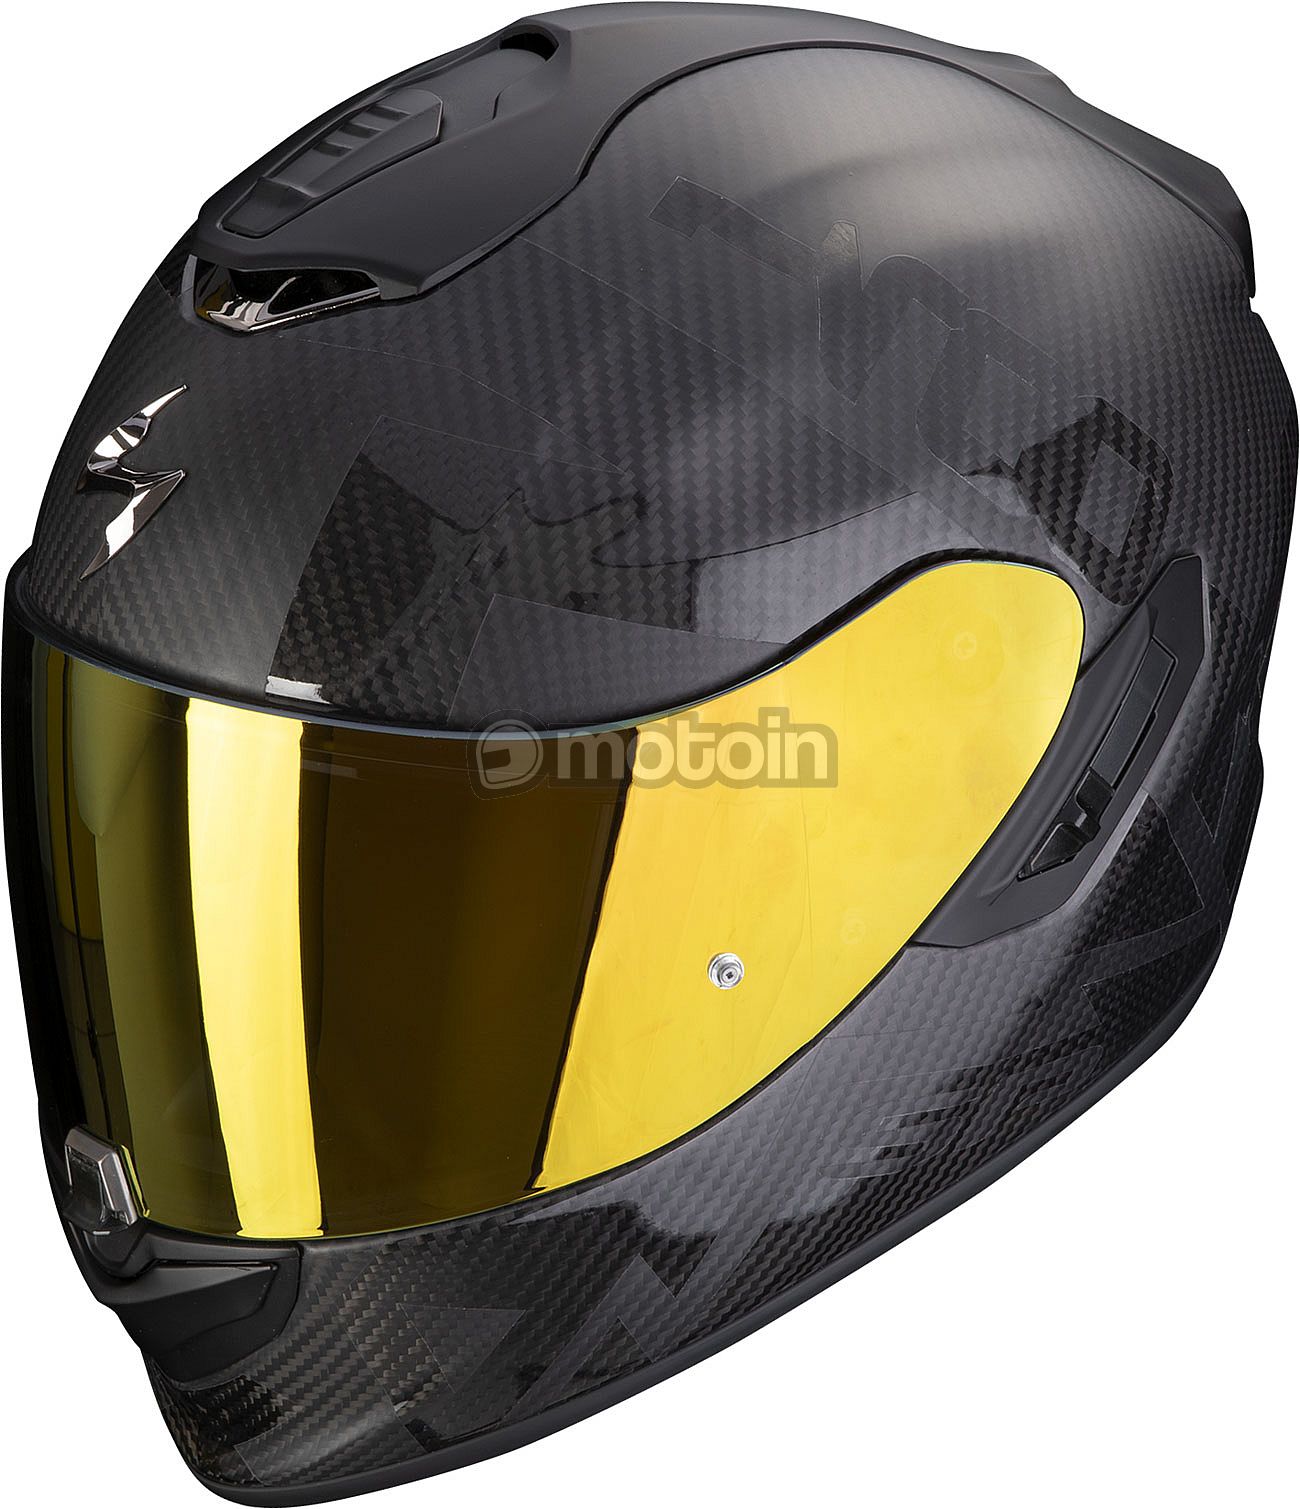 Scorpion EXO-1400 Evo Carbon Air Cerebro, интегральный шлем